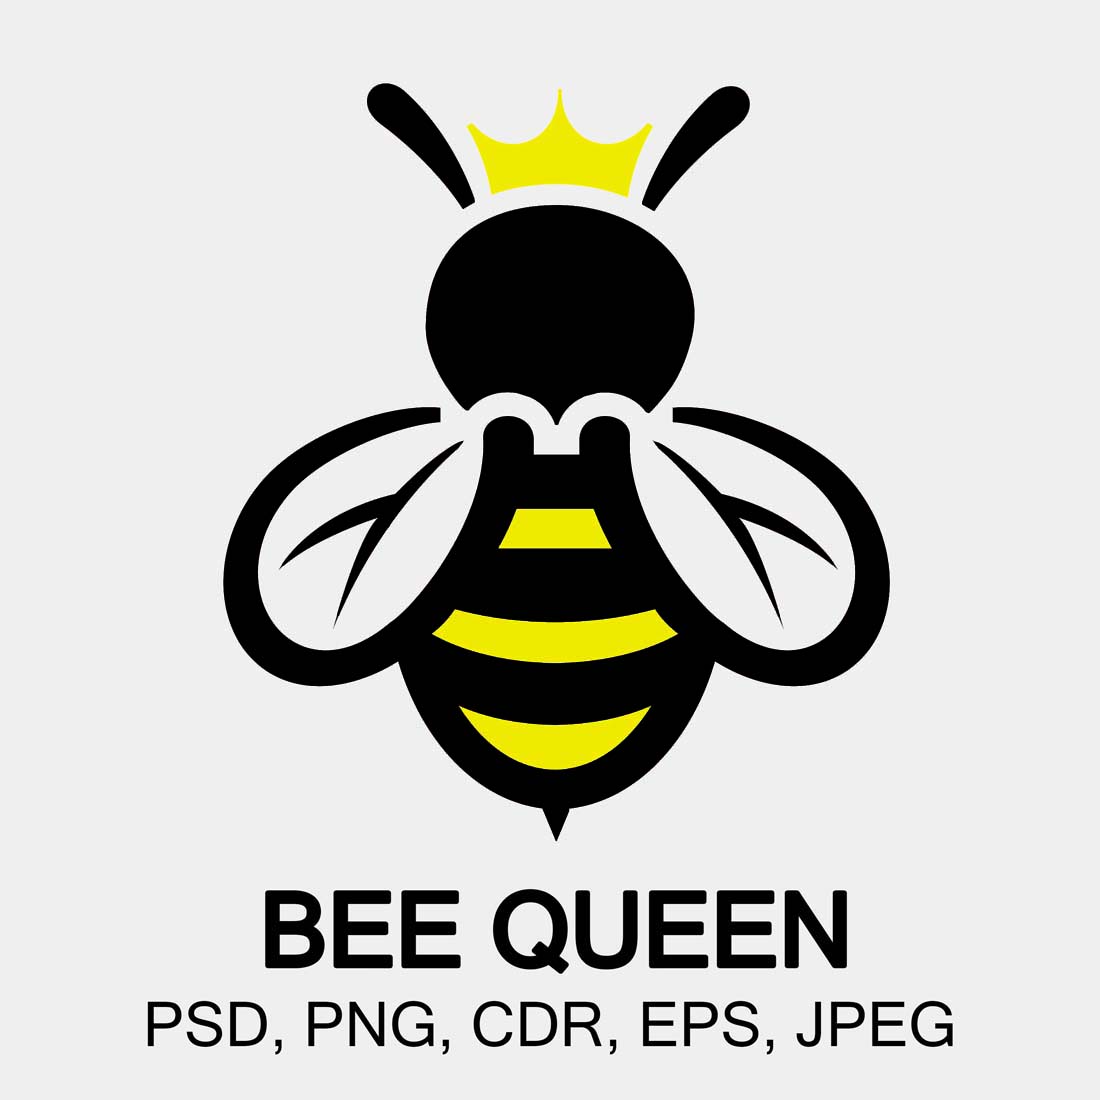 Creative Honey Bee Queen Logo cover image.